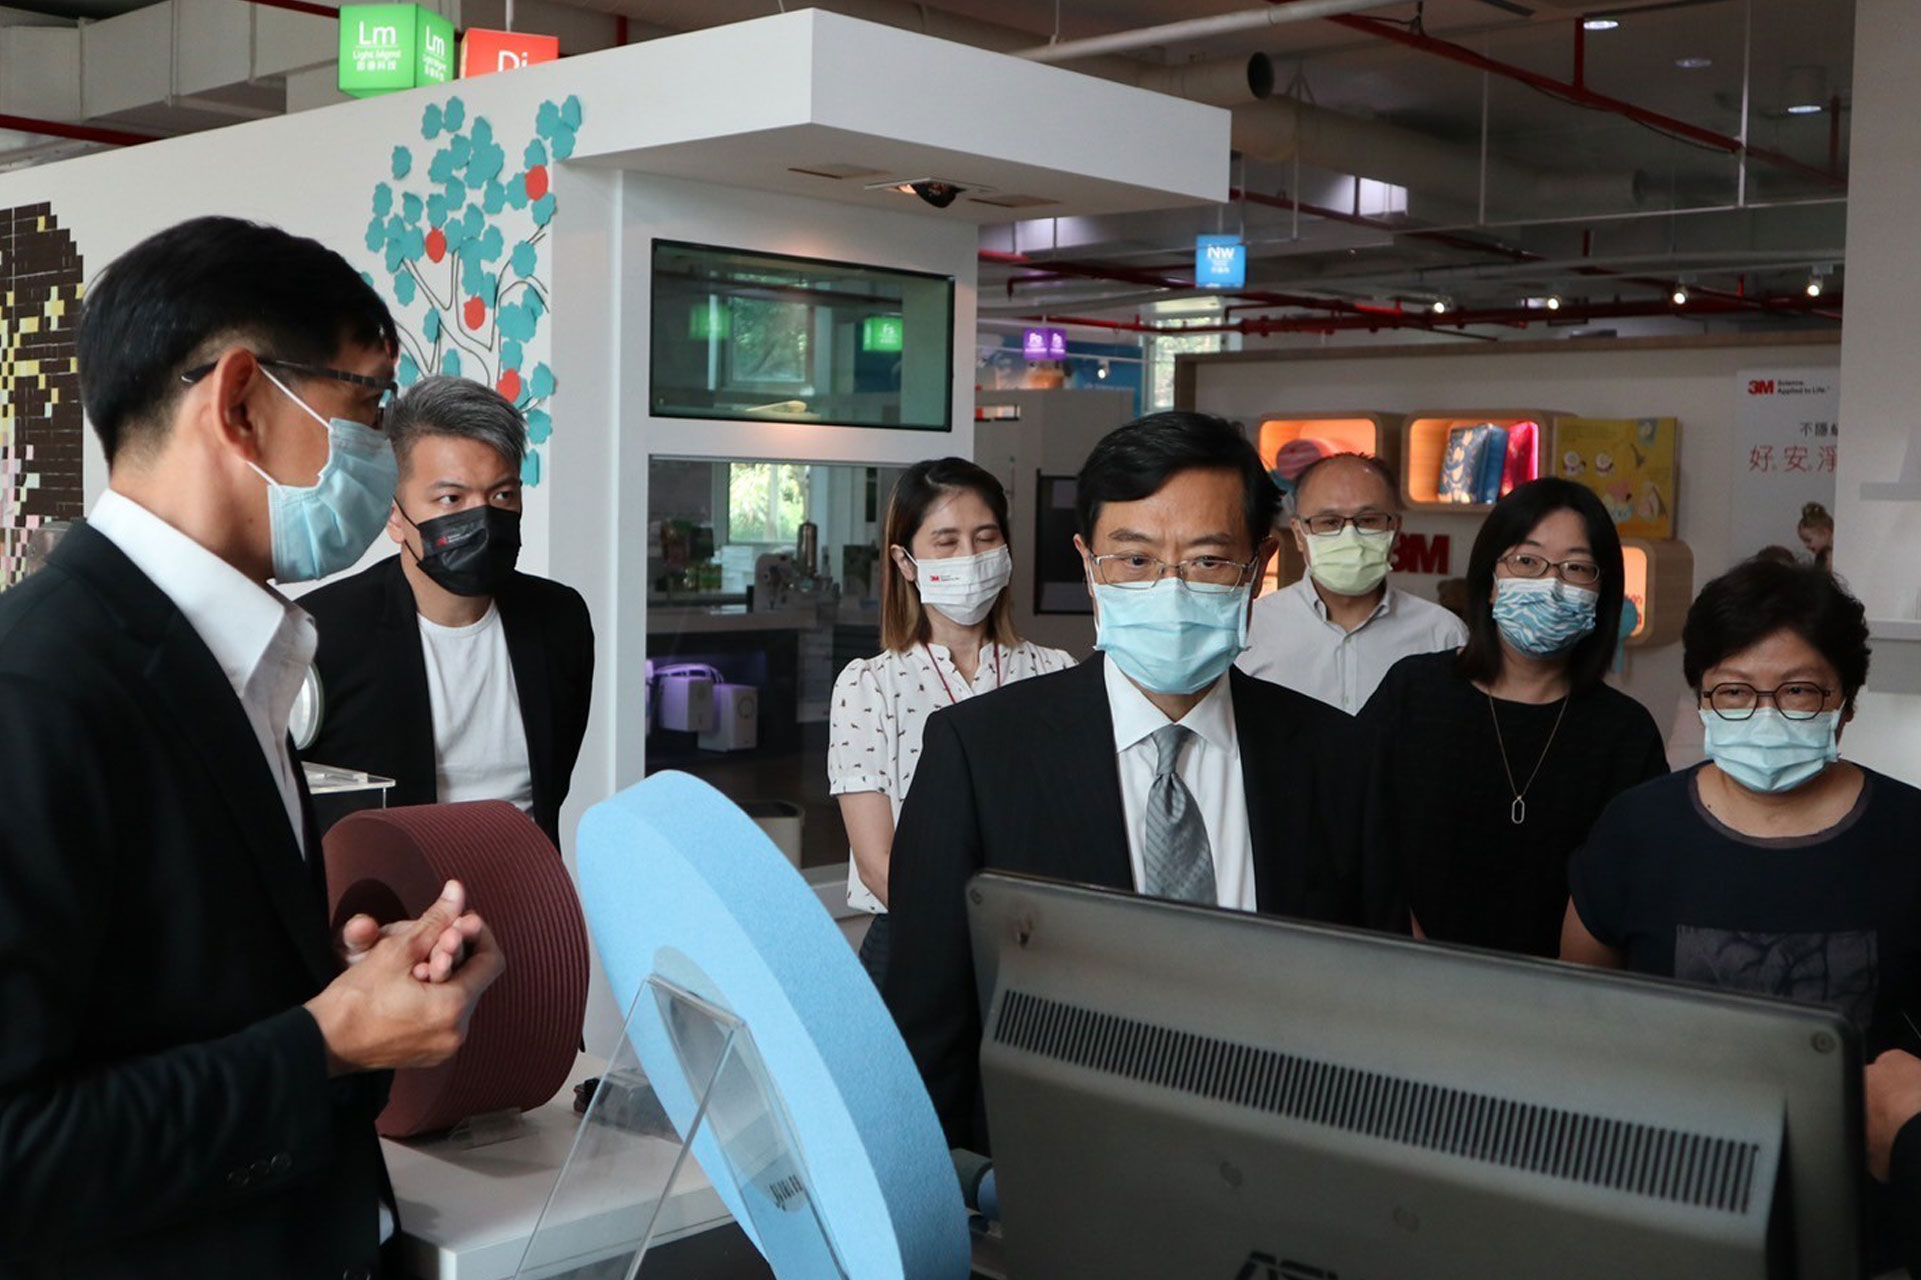 Deputy Minister Chen visits 3M Company Photo-2